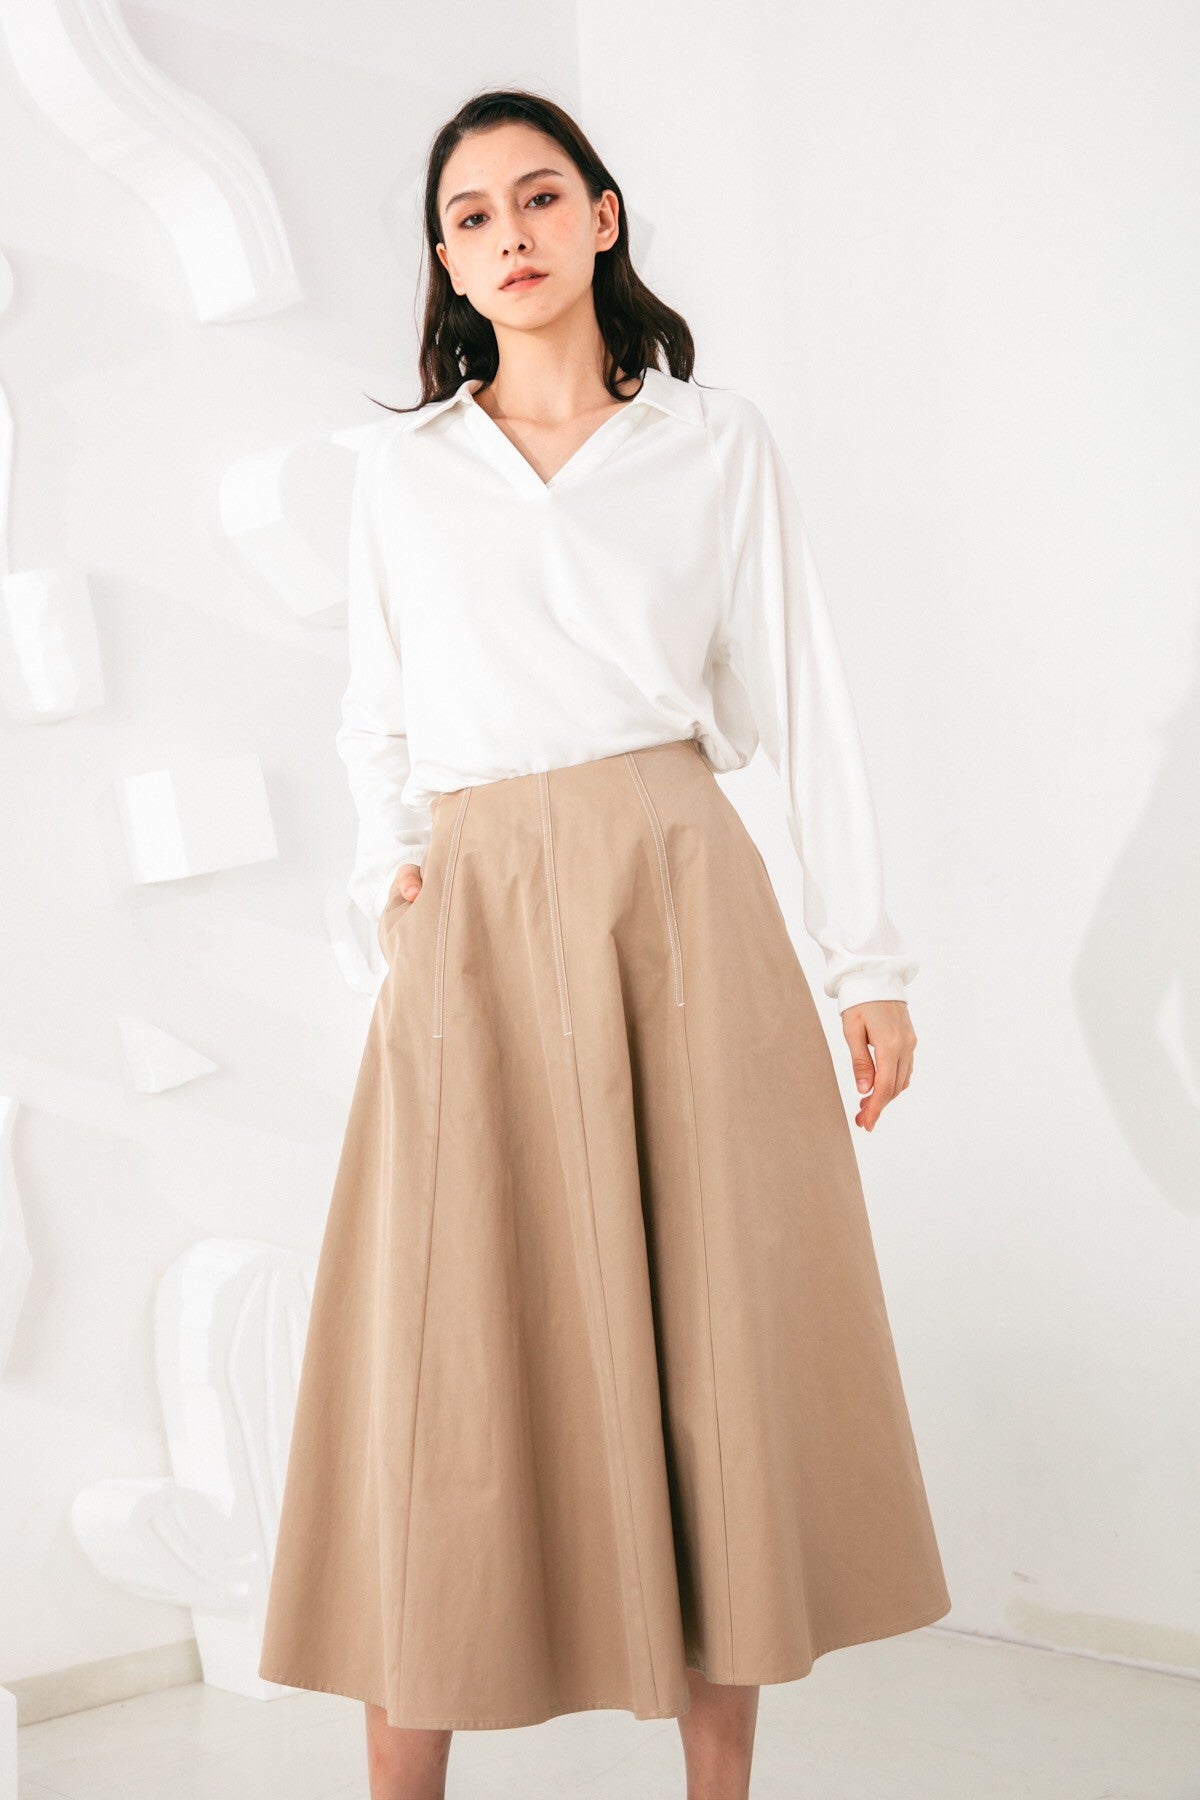 SKYE San Francisco SF shop ethical modern minimalist quality women clothing fashion Jeanne Midi Skirt 2